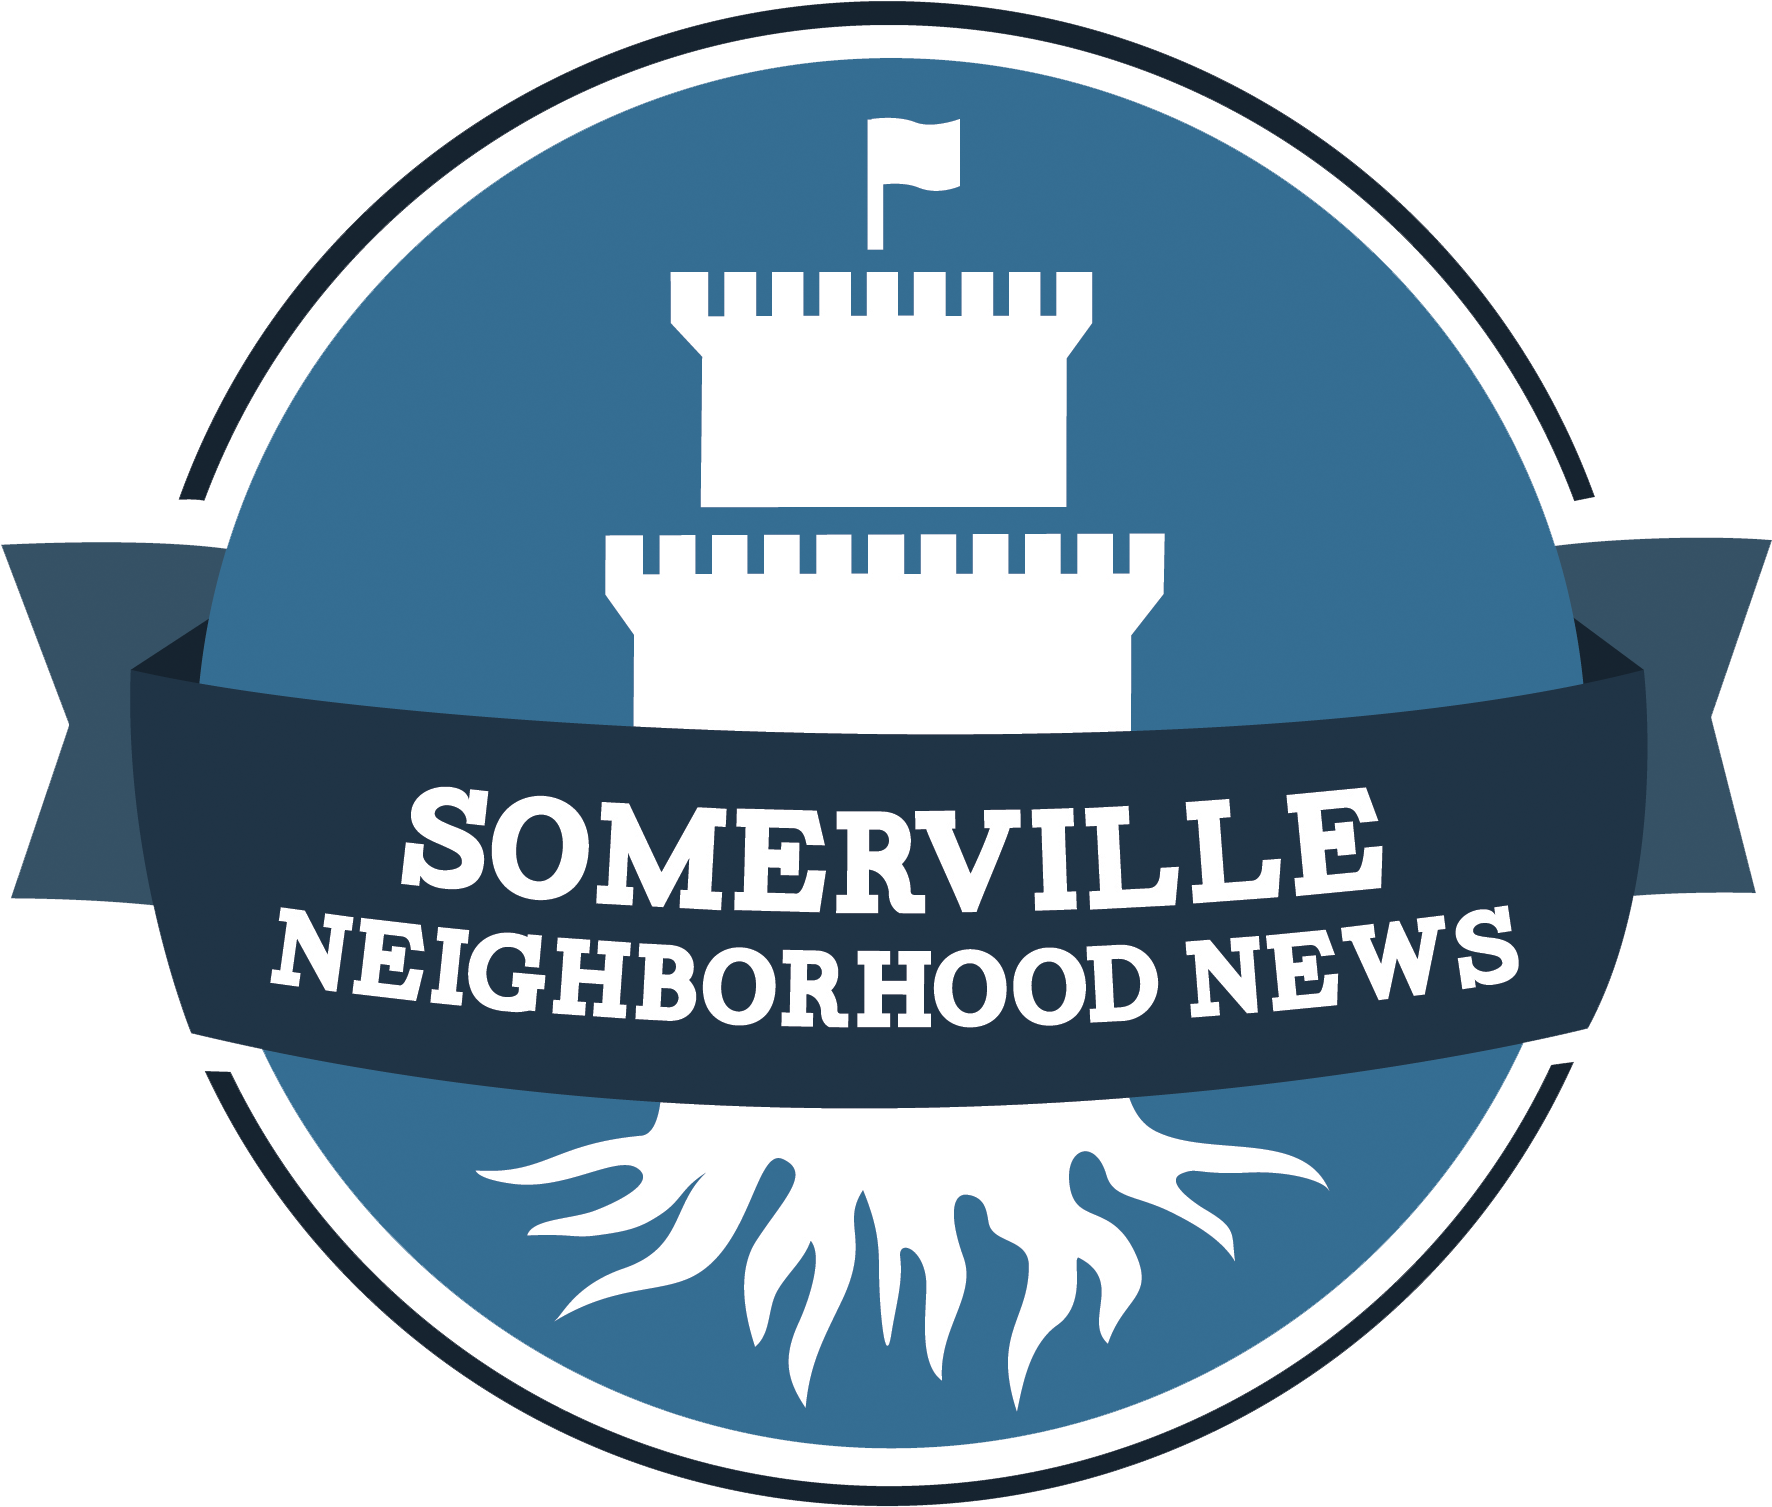 Somerville Neighborhood News (1891x1622)